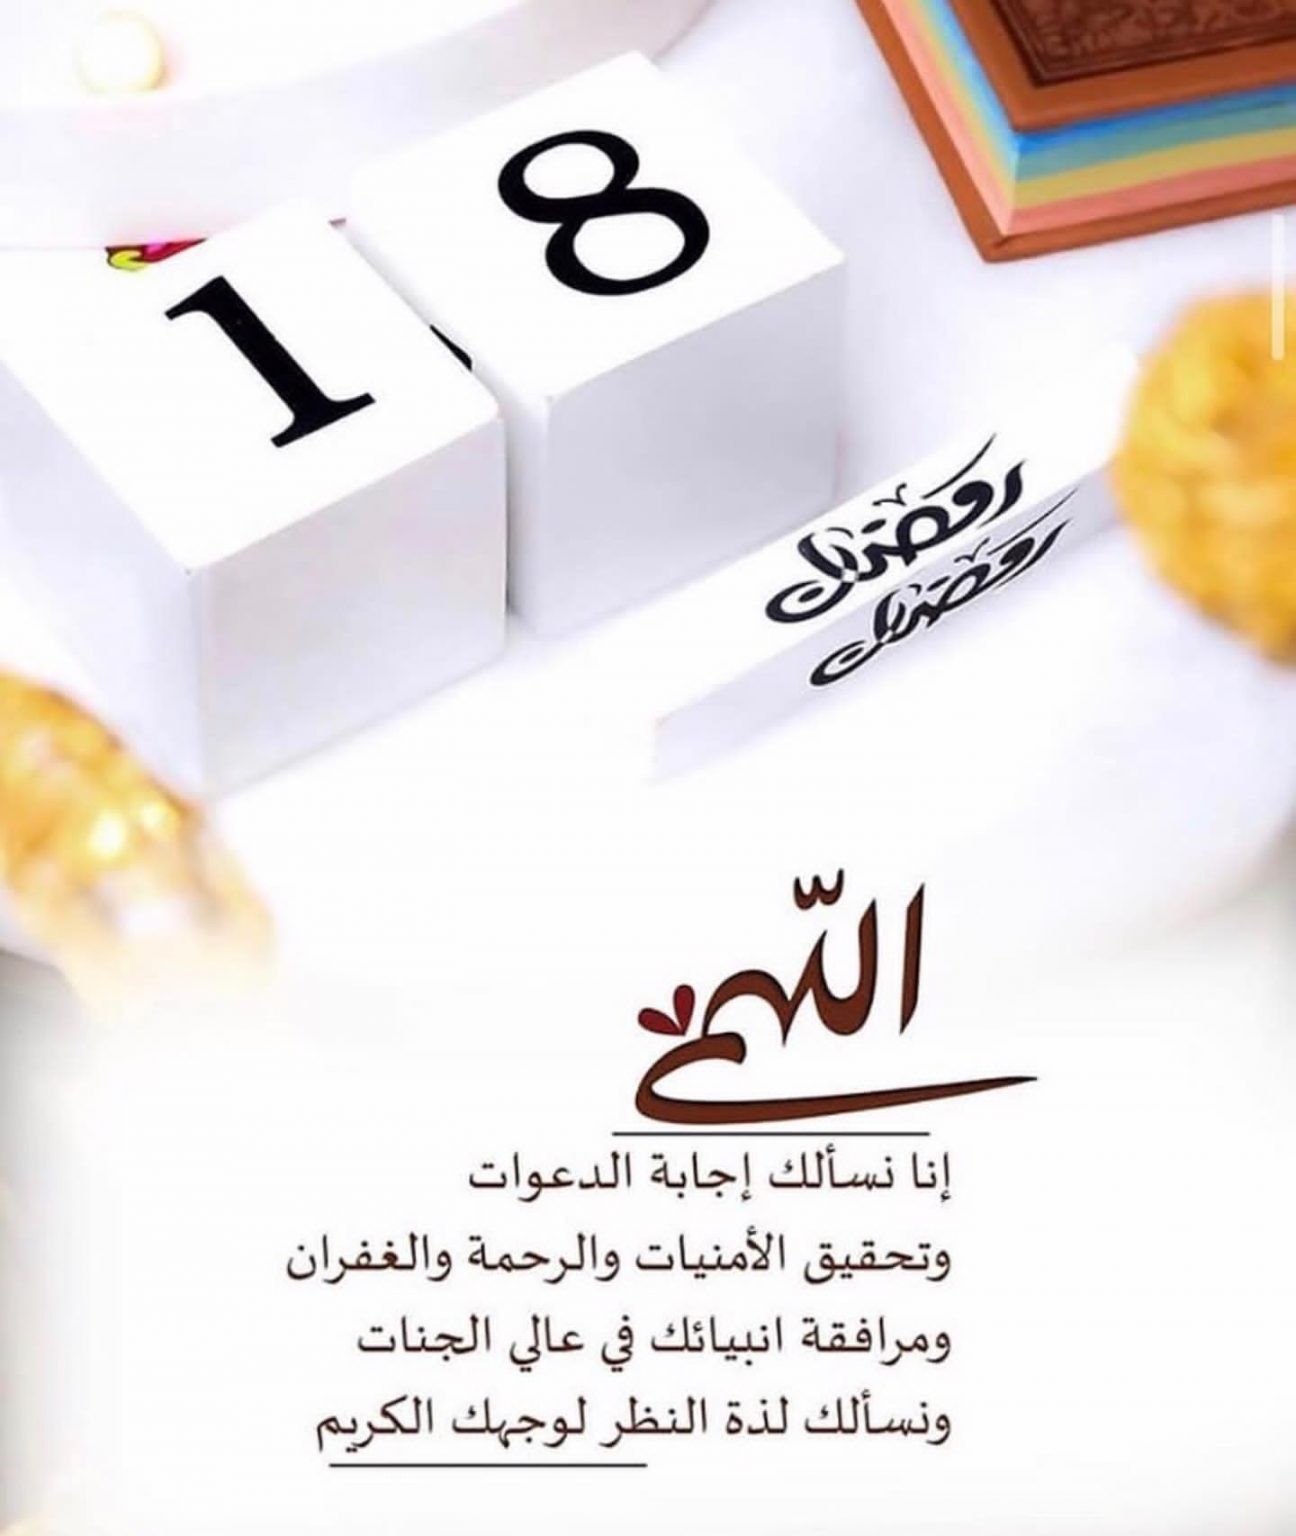 makkah_by_wehab-٢٠٢١٠٤٢٩-0001-1296x1536.jpg